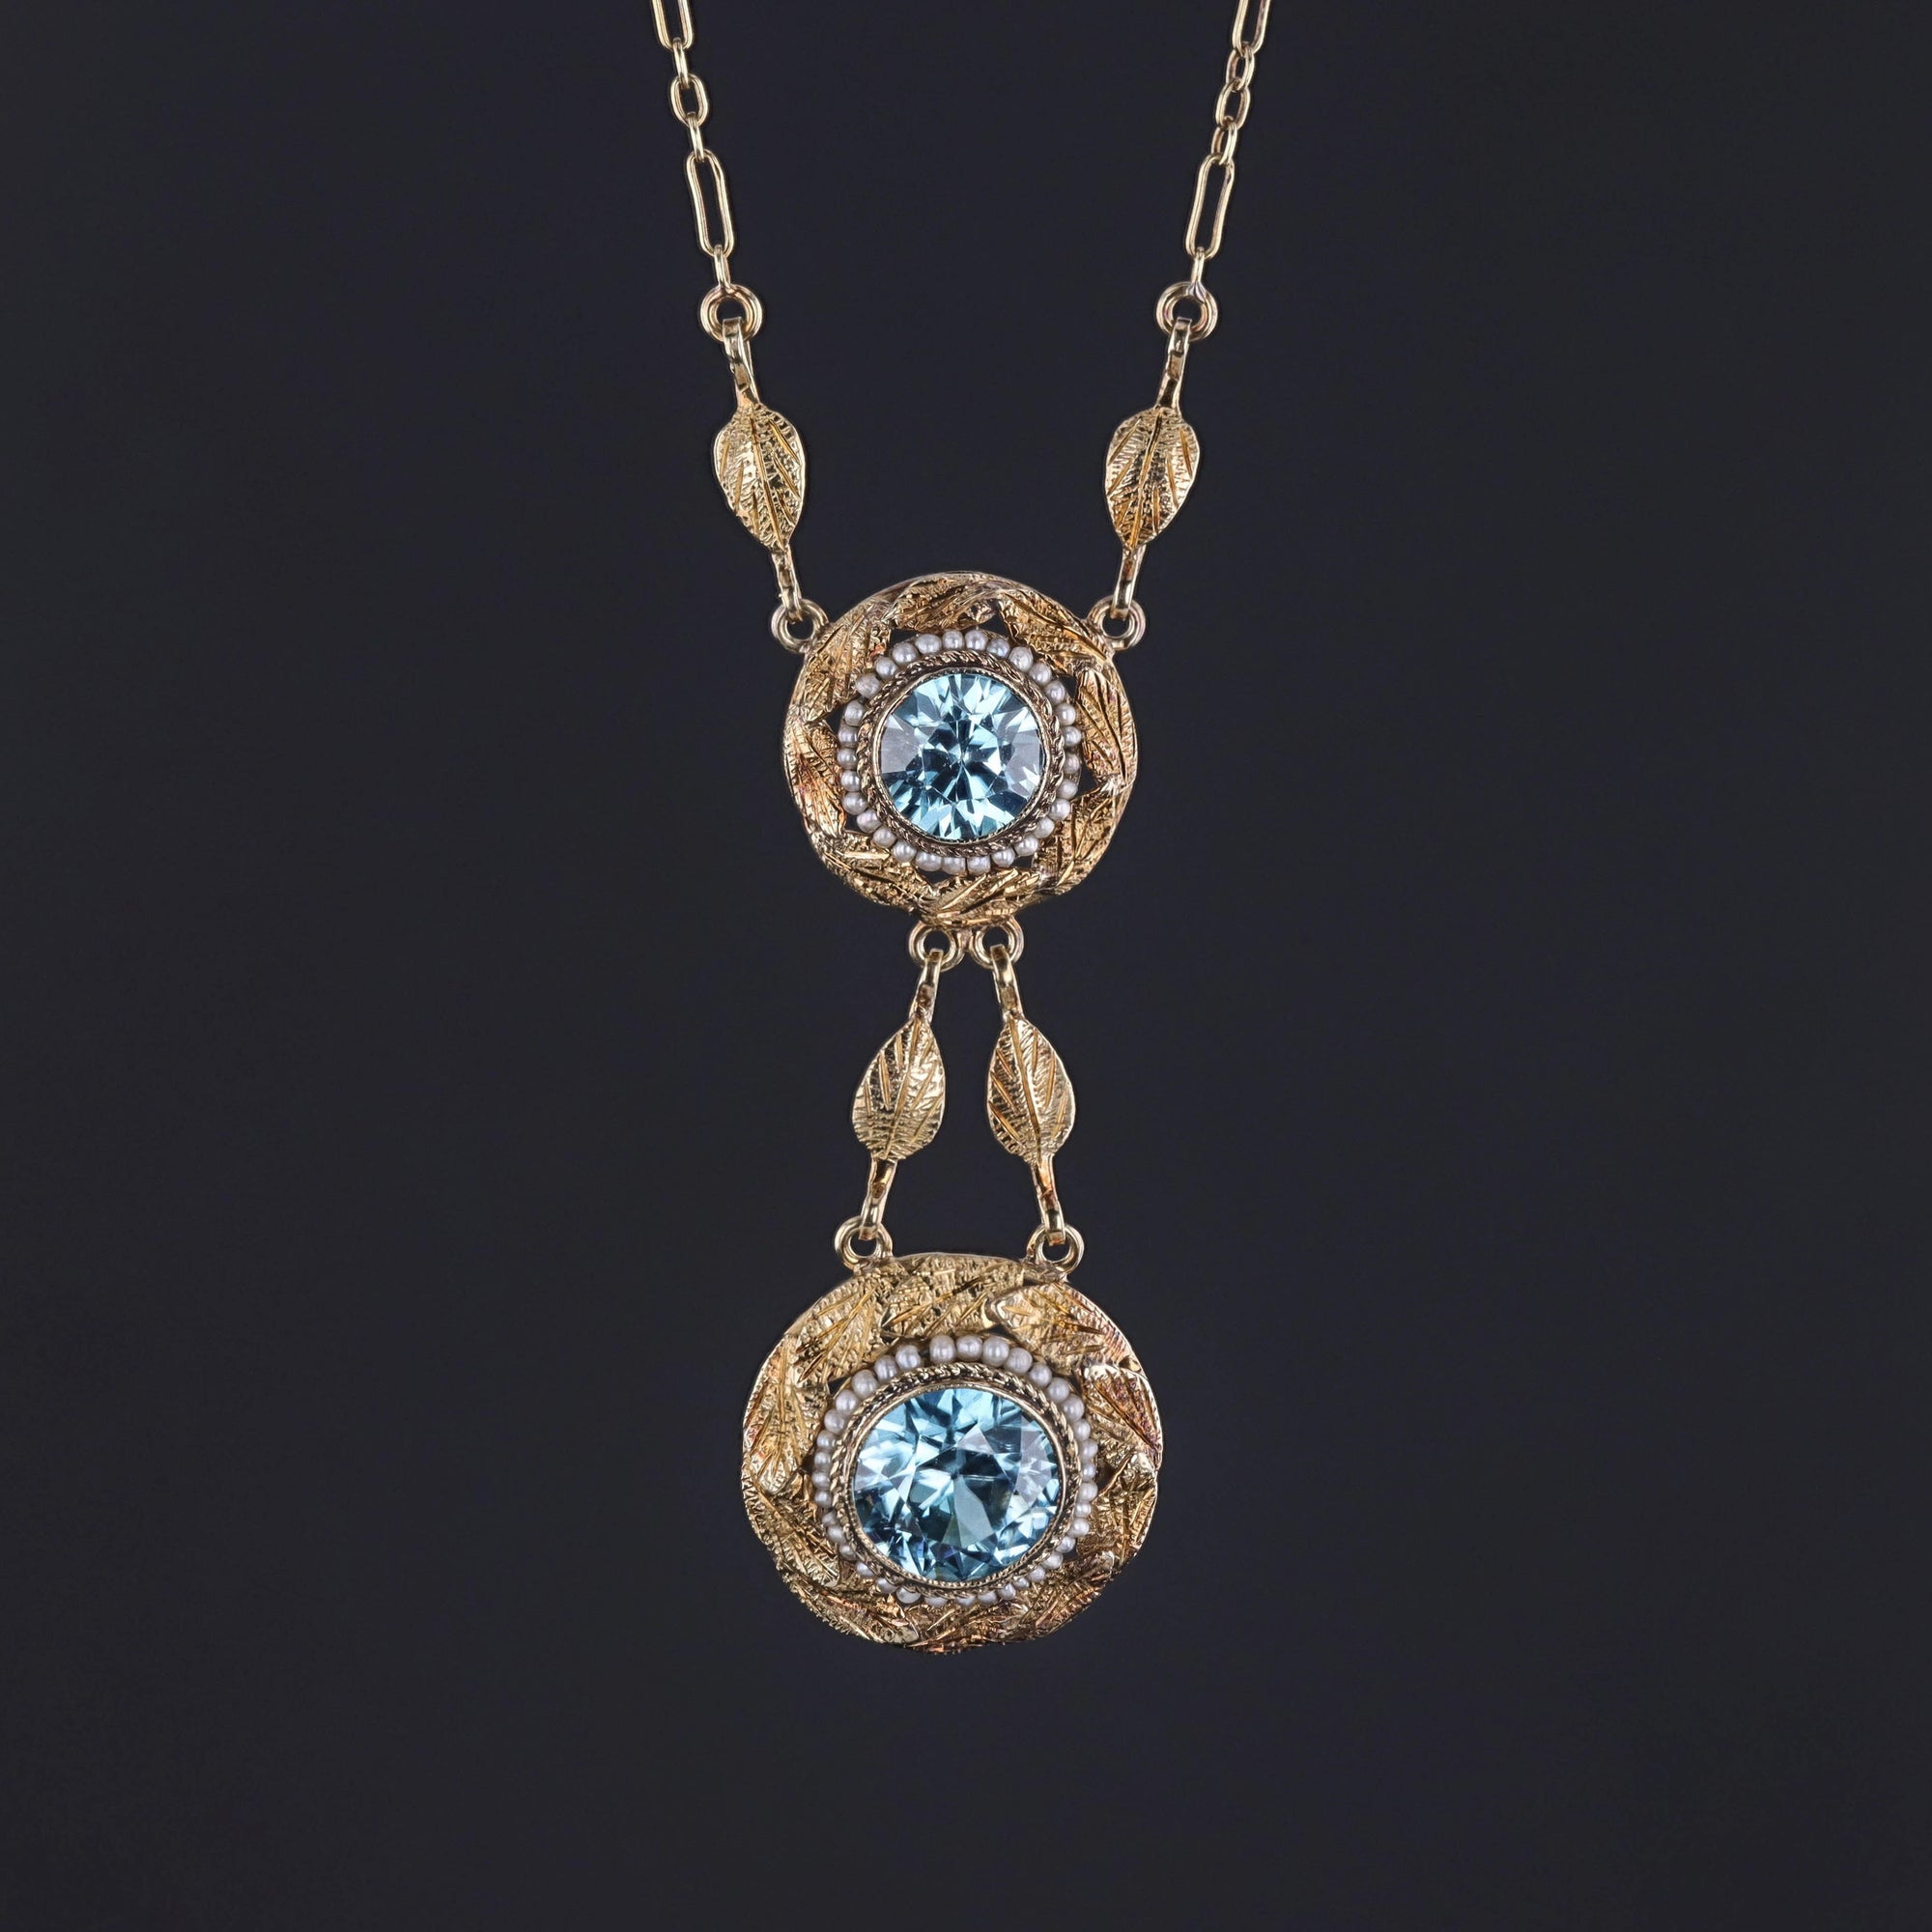 Victorian Zircon Necklace of 14k Gold